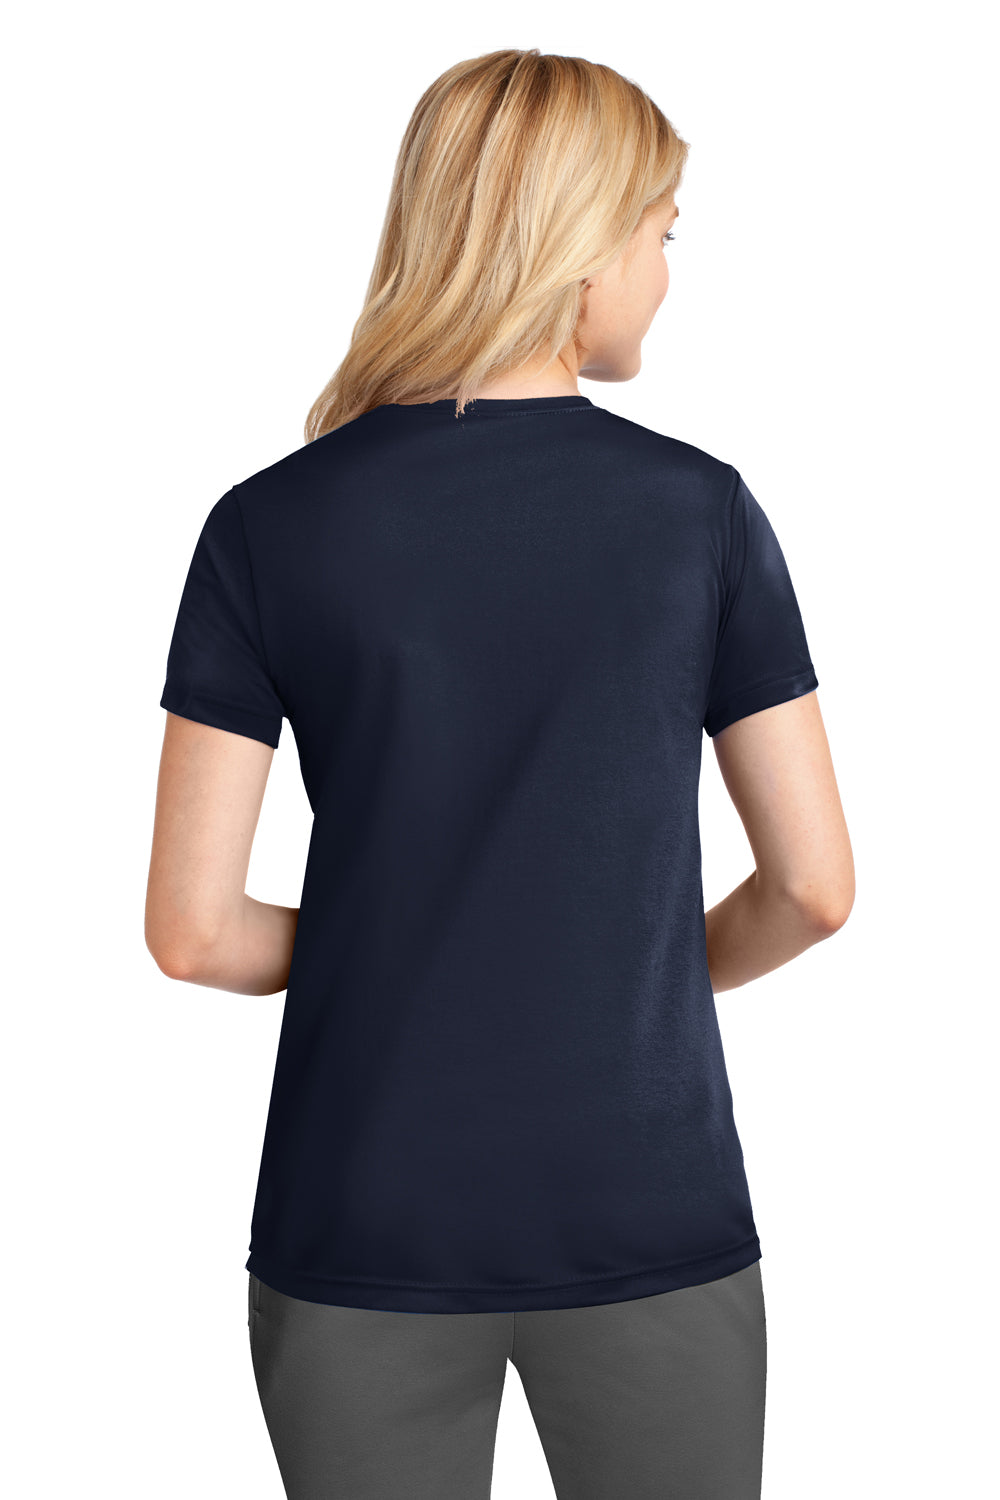 Port & Company LPC380 Womens Dry Zone Performance Moisture Wicking Short Sleeve Crewneck T-Shirt Navy Blue Back